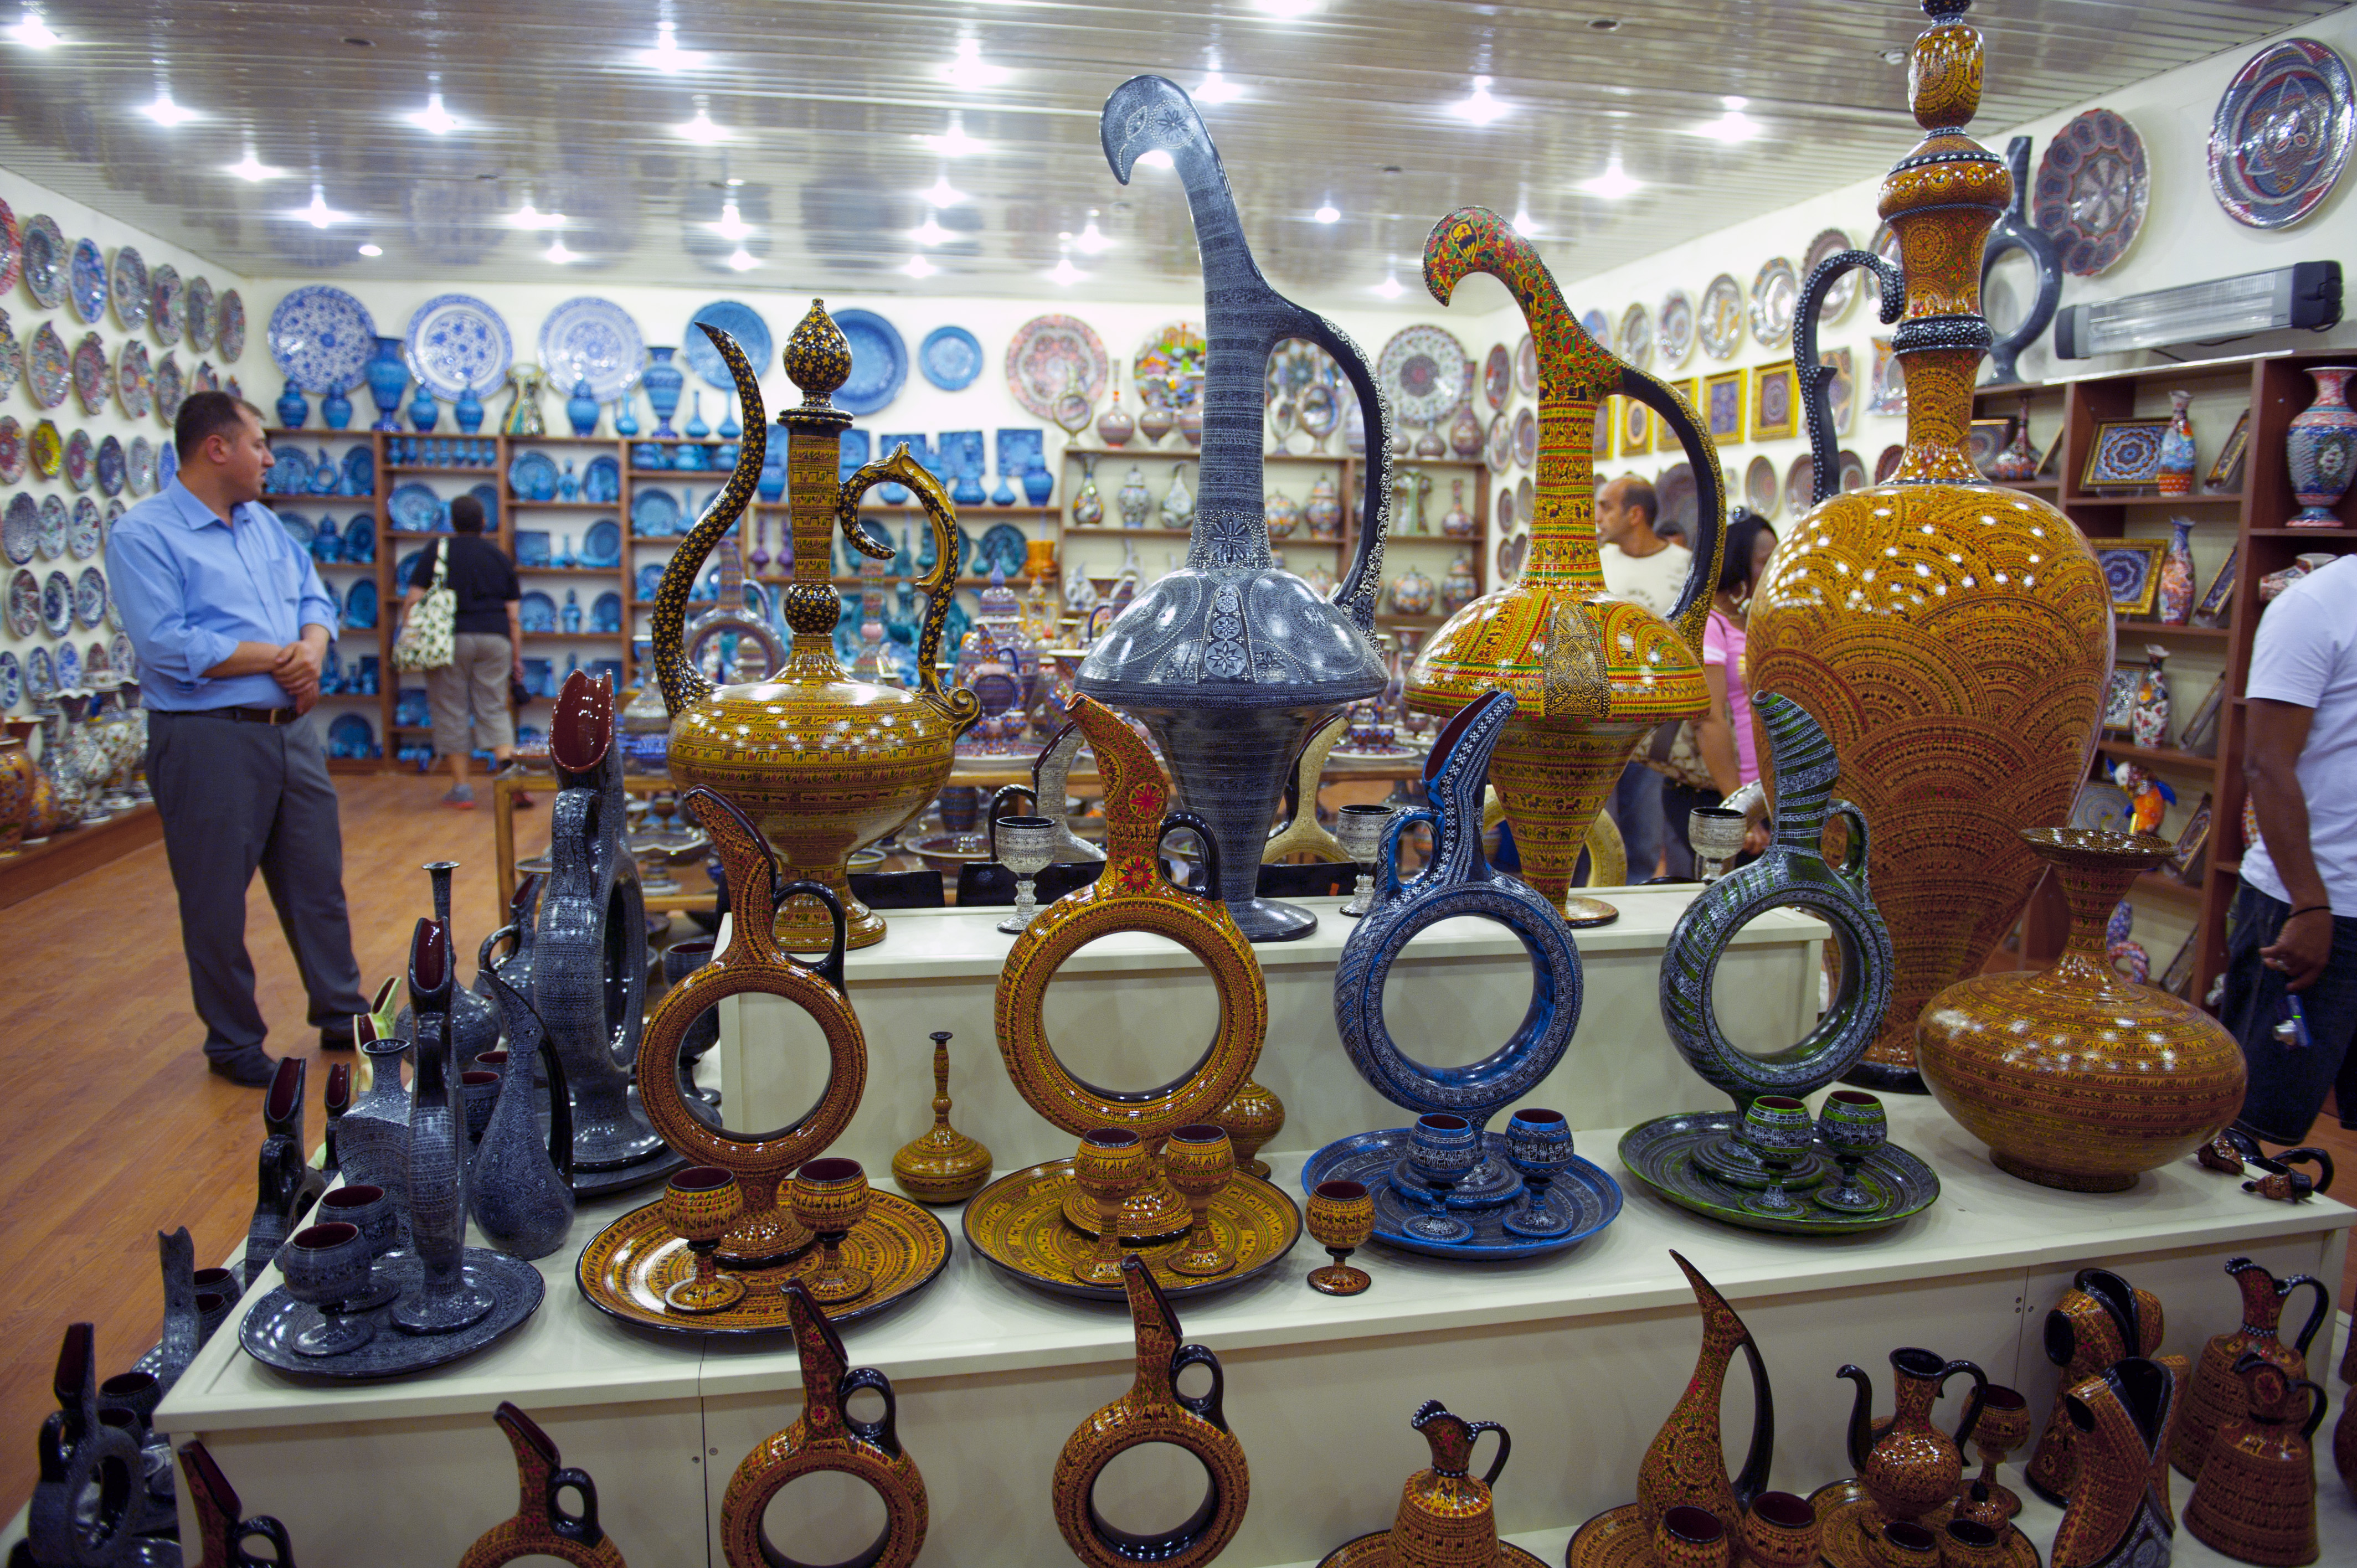 Pottery and Ceramics